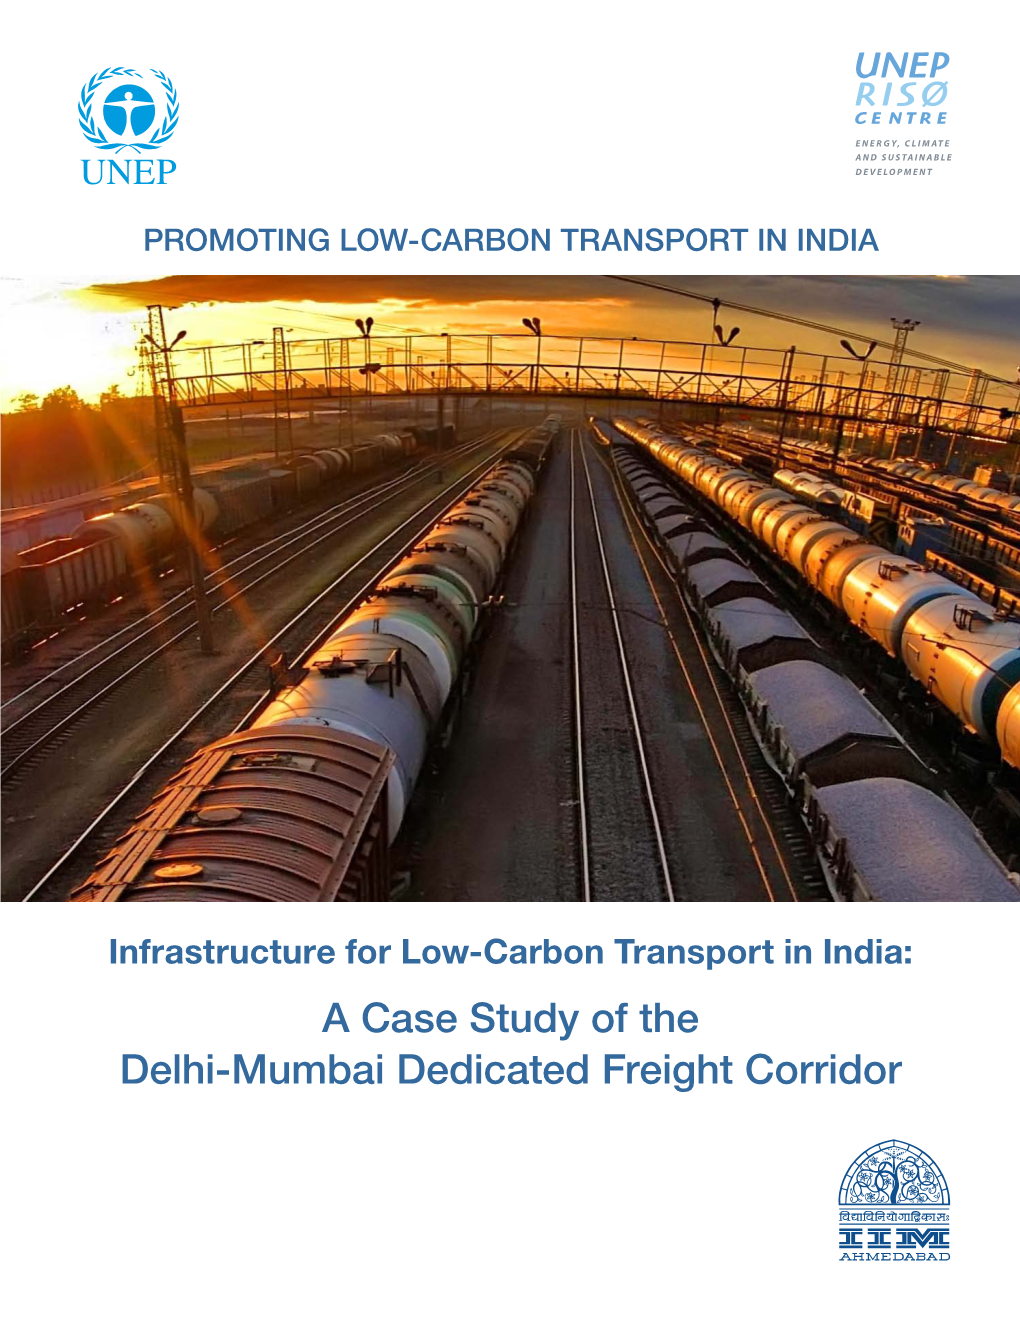 A Case Study of the Delhi-Mumbai Dedicated Freight Corridor